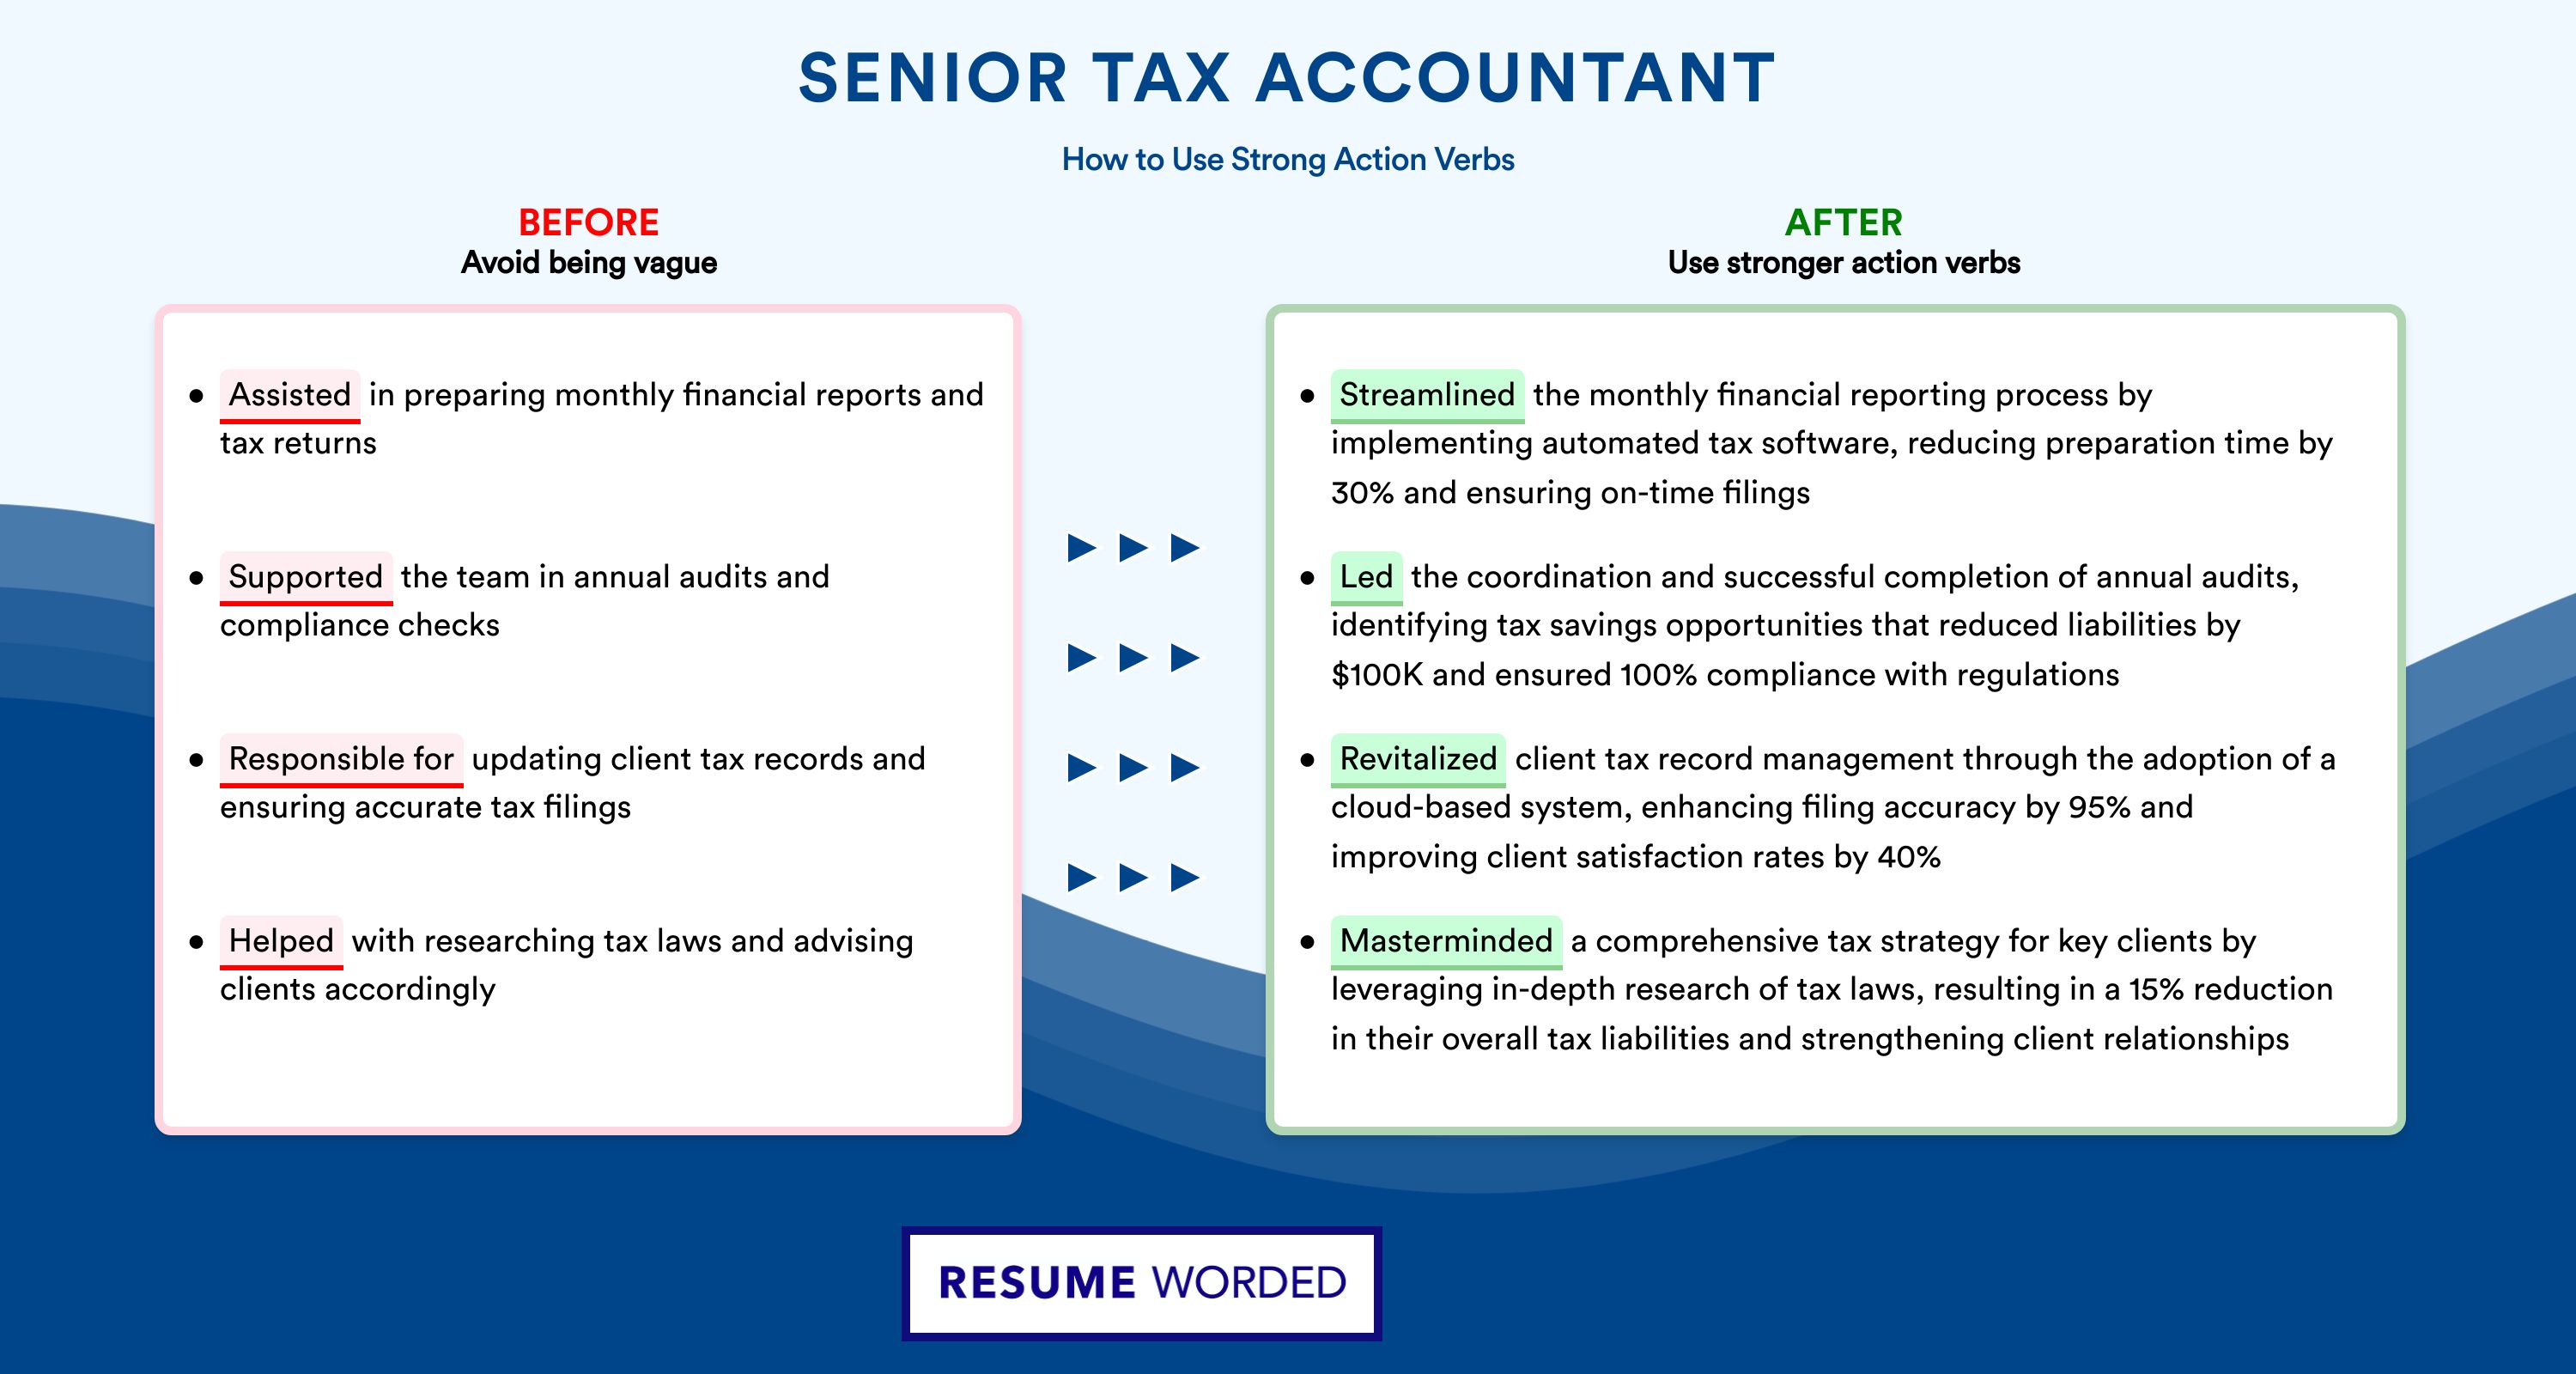 Action Verbs for Senior Tax Accountant